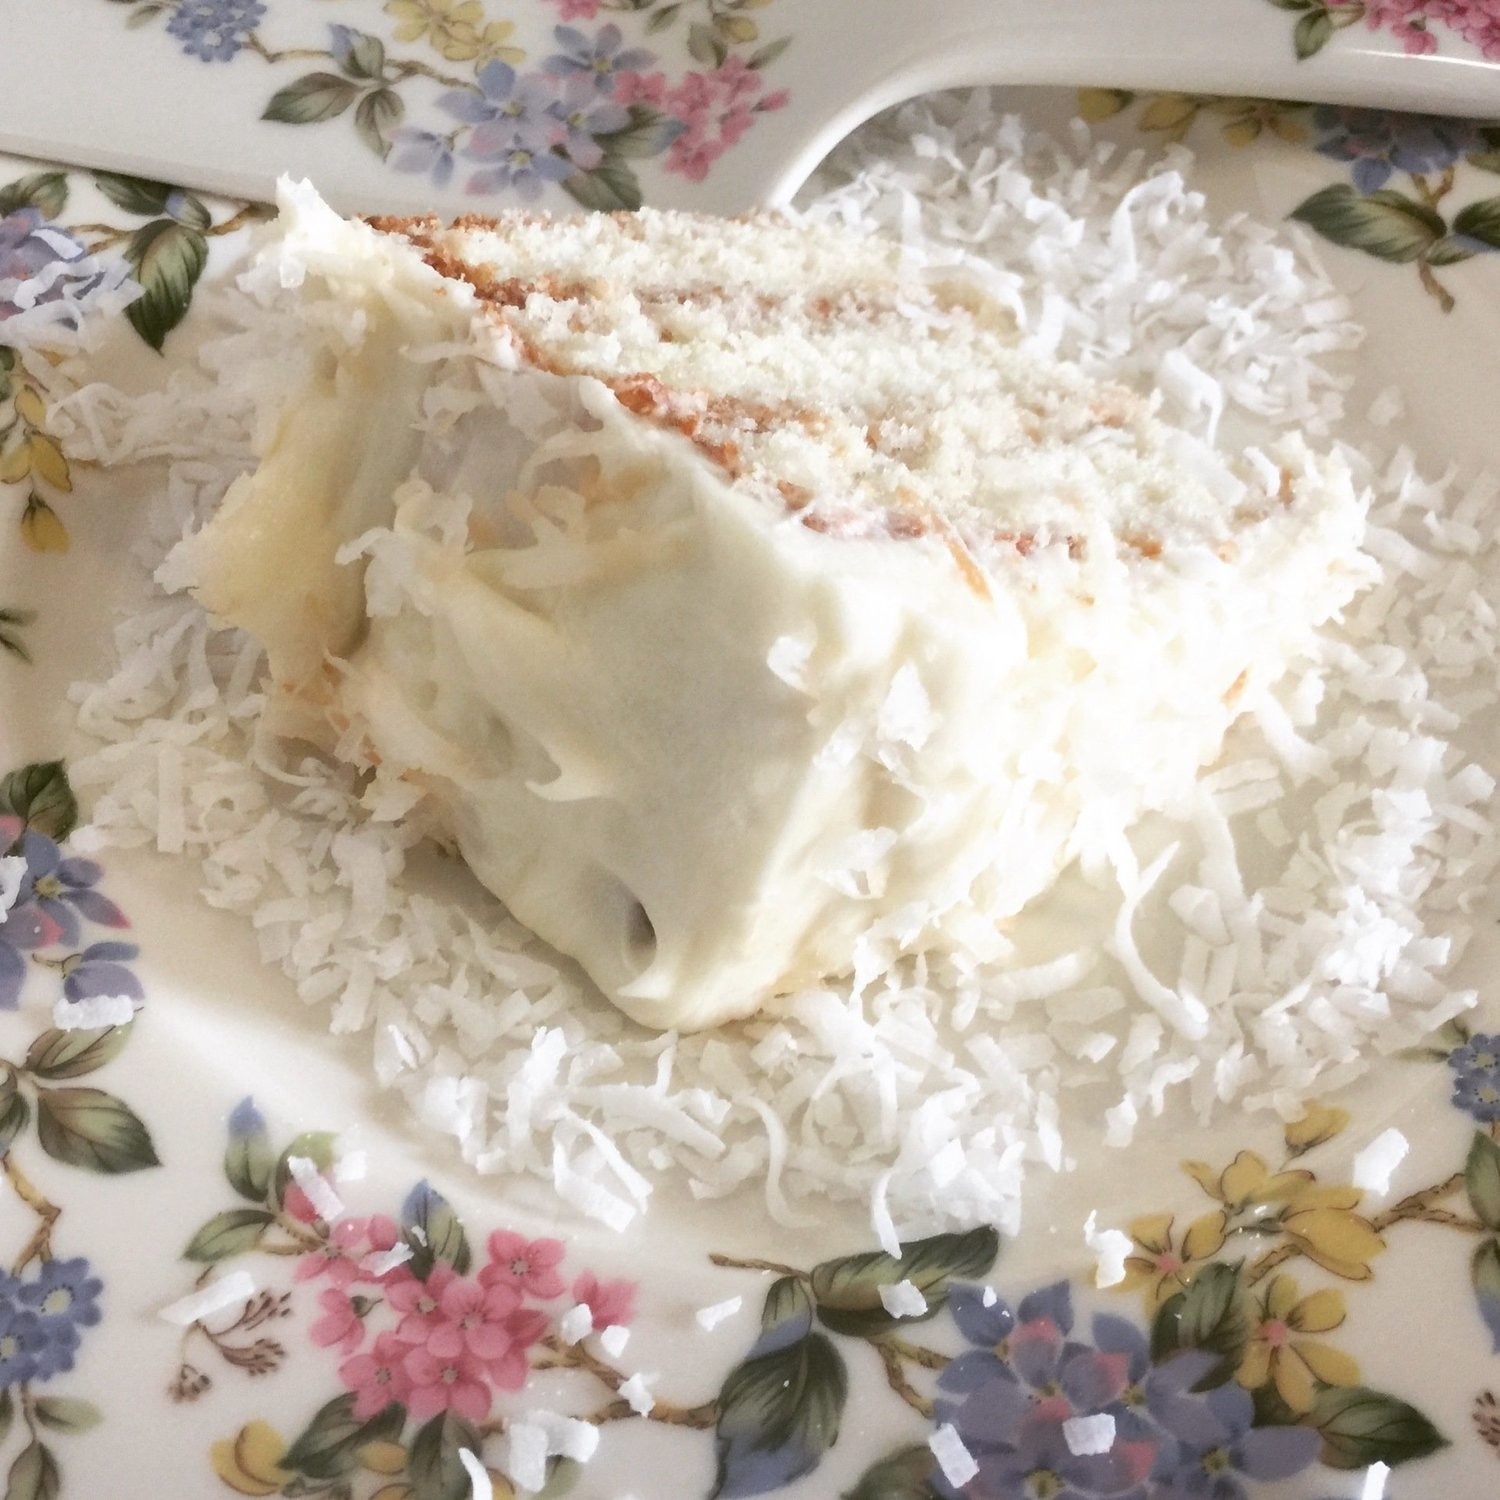 Coconut Cream Cheese Cake, 10" Round - BEST SELLER